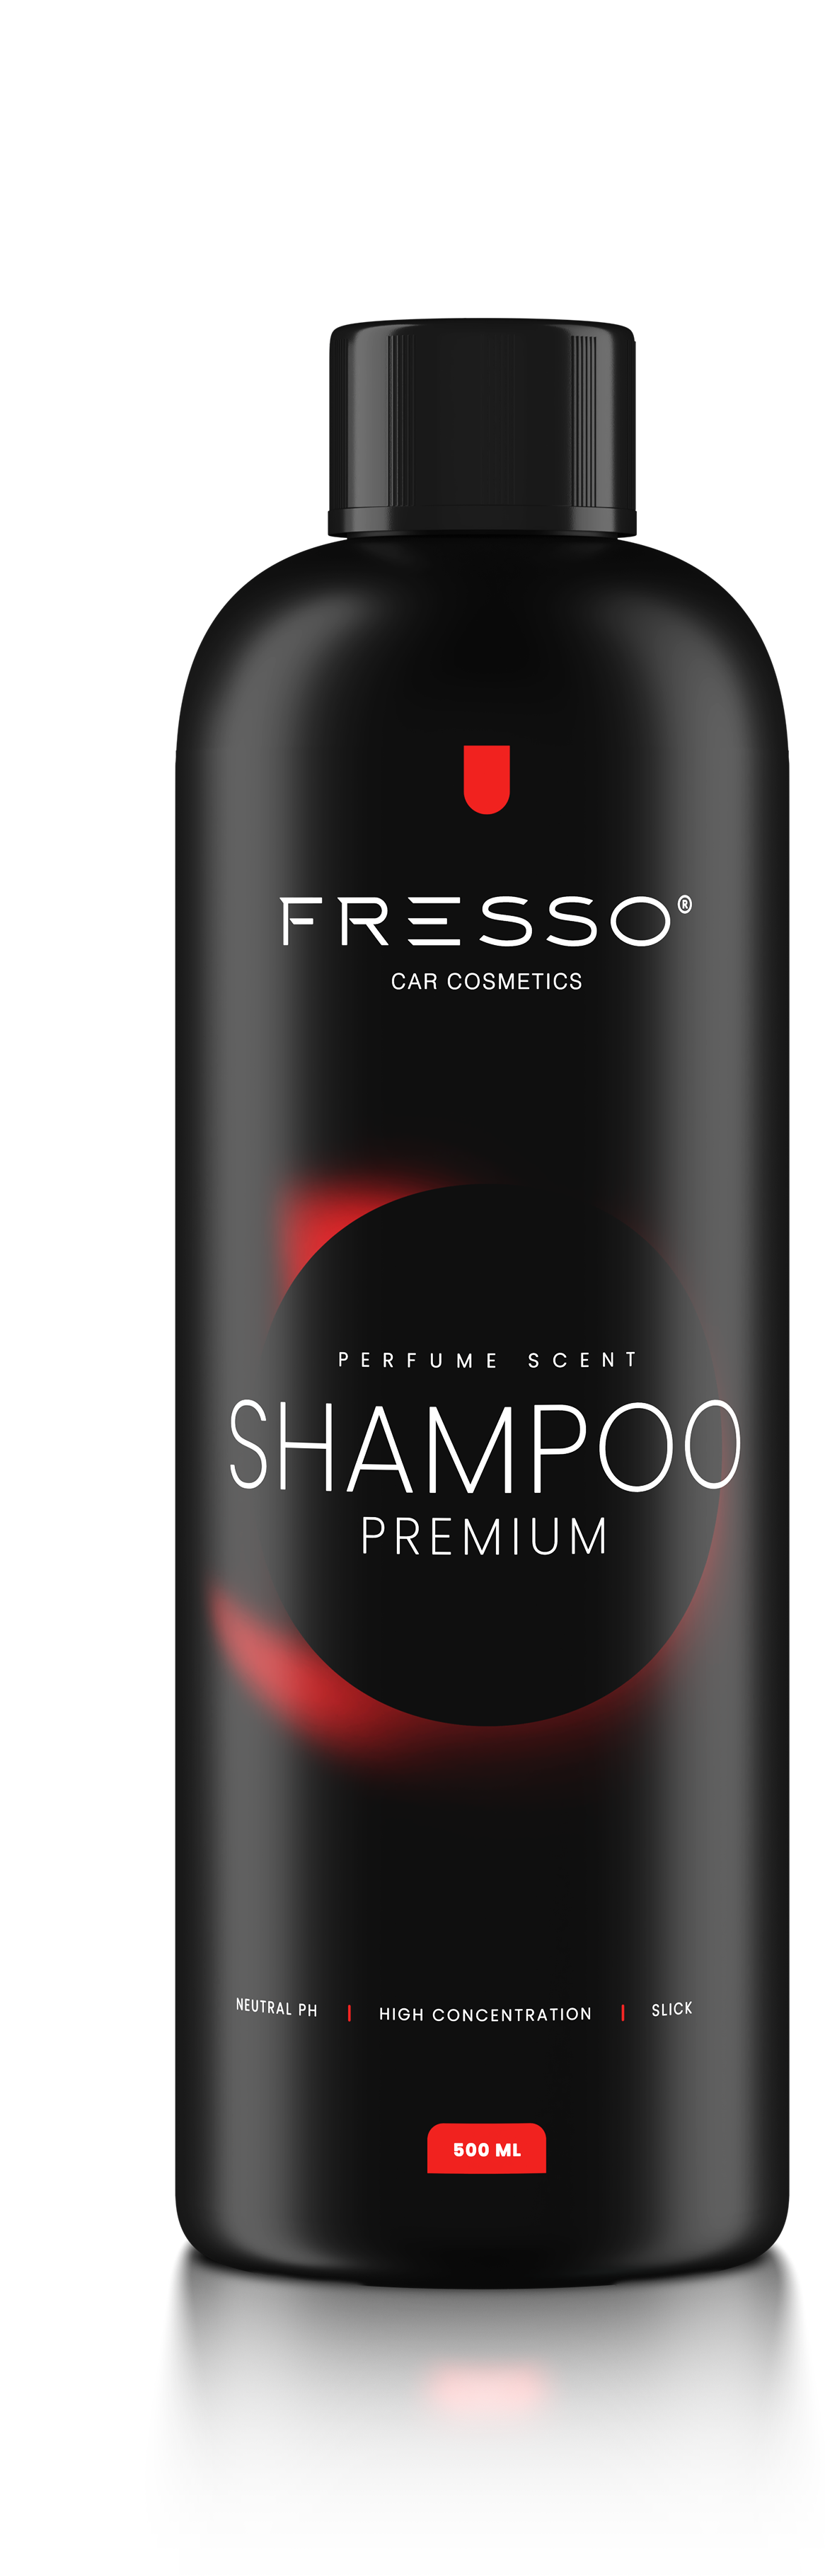 Shampoo Premium